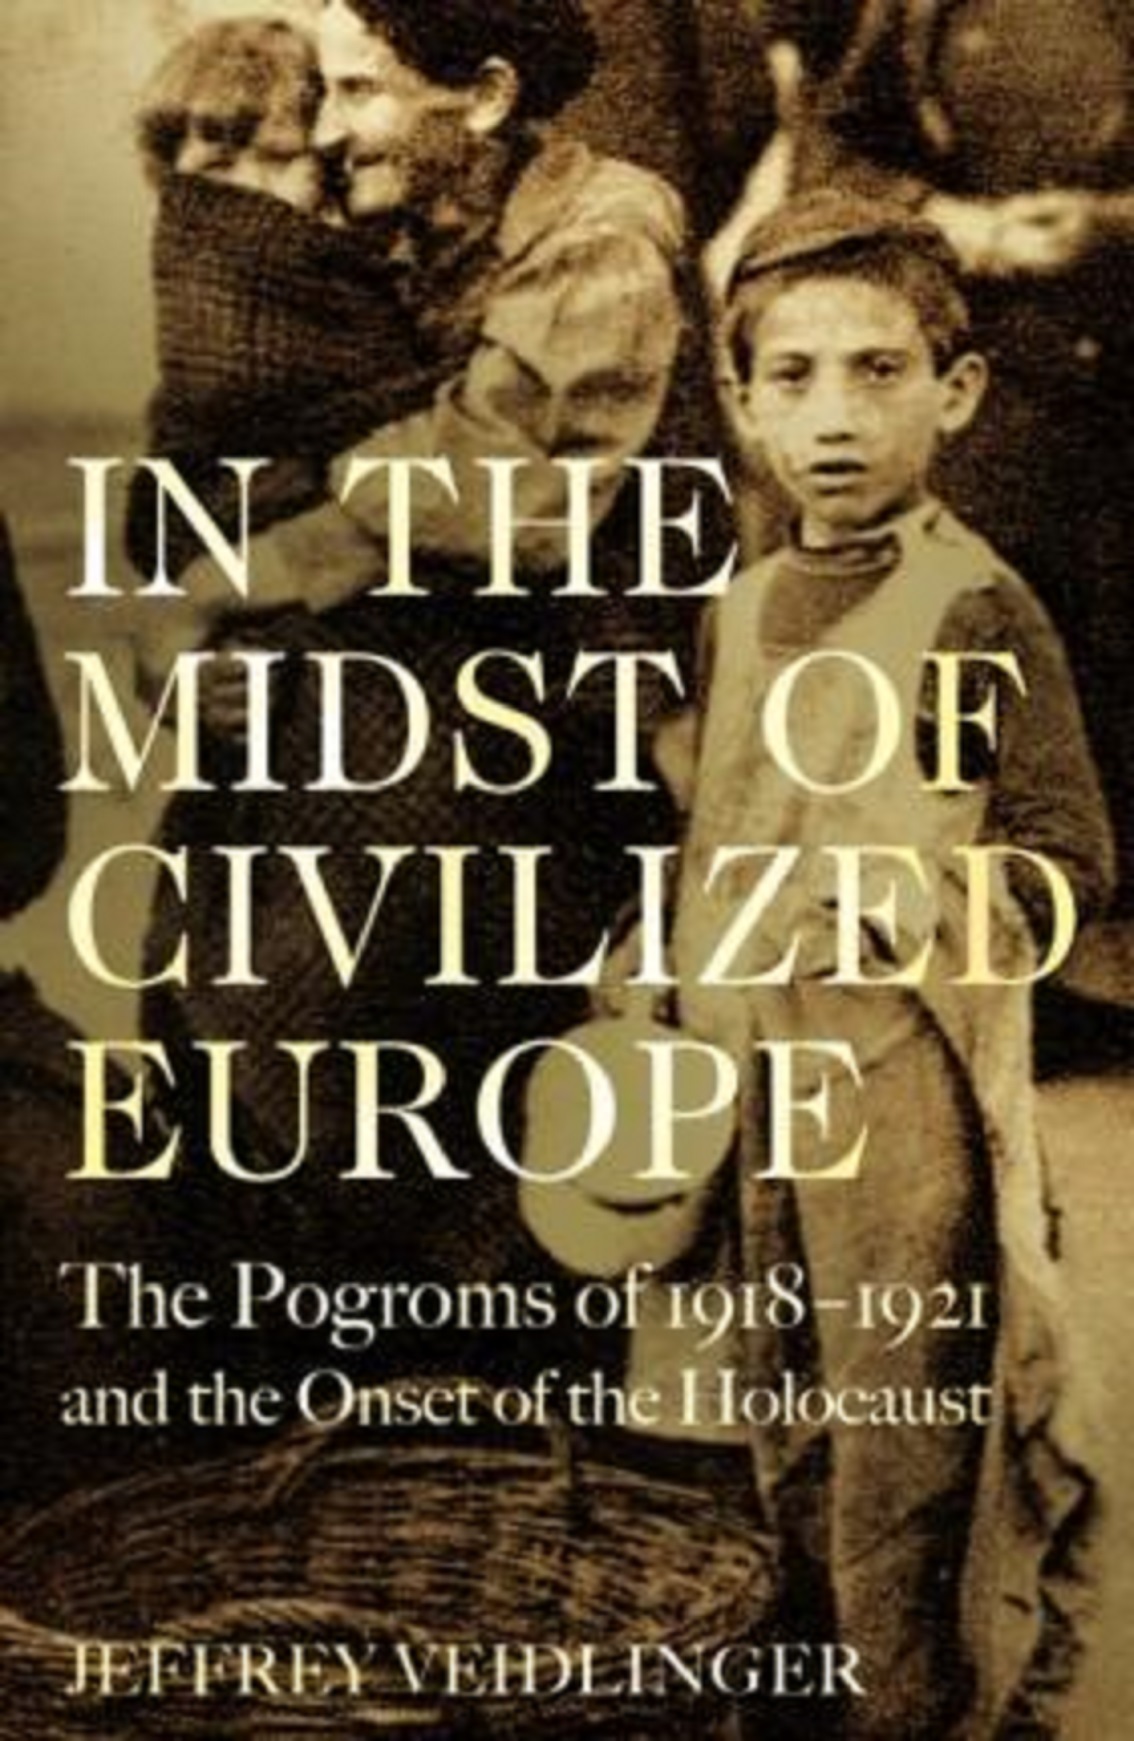 In the Midst of Civilized Europe | Jeffrey Veidlinger image21